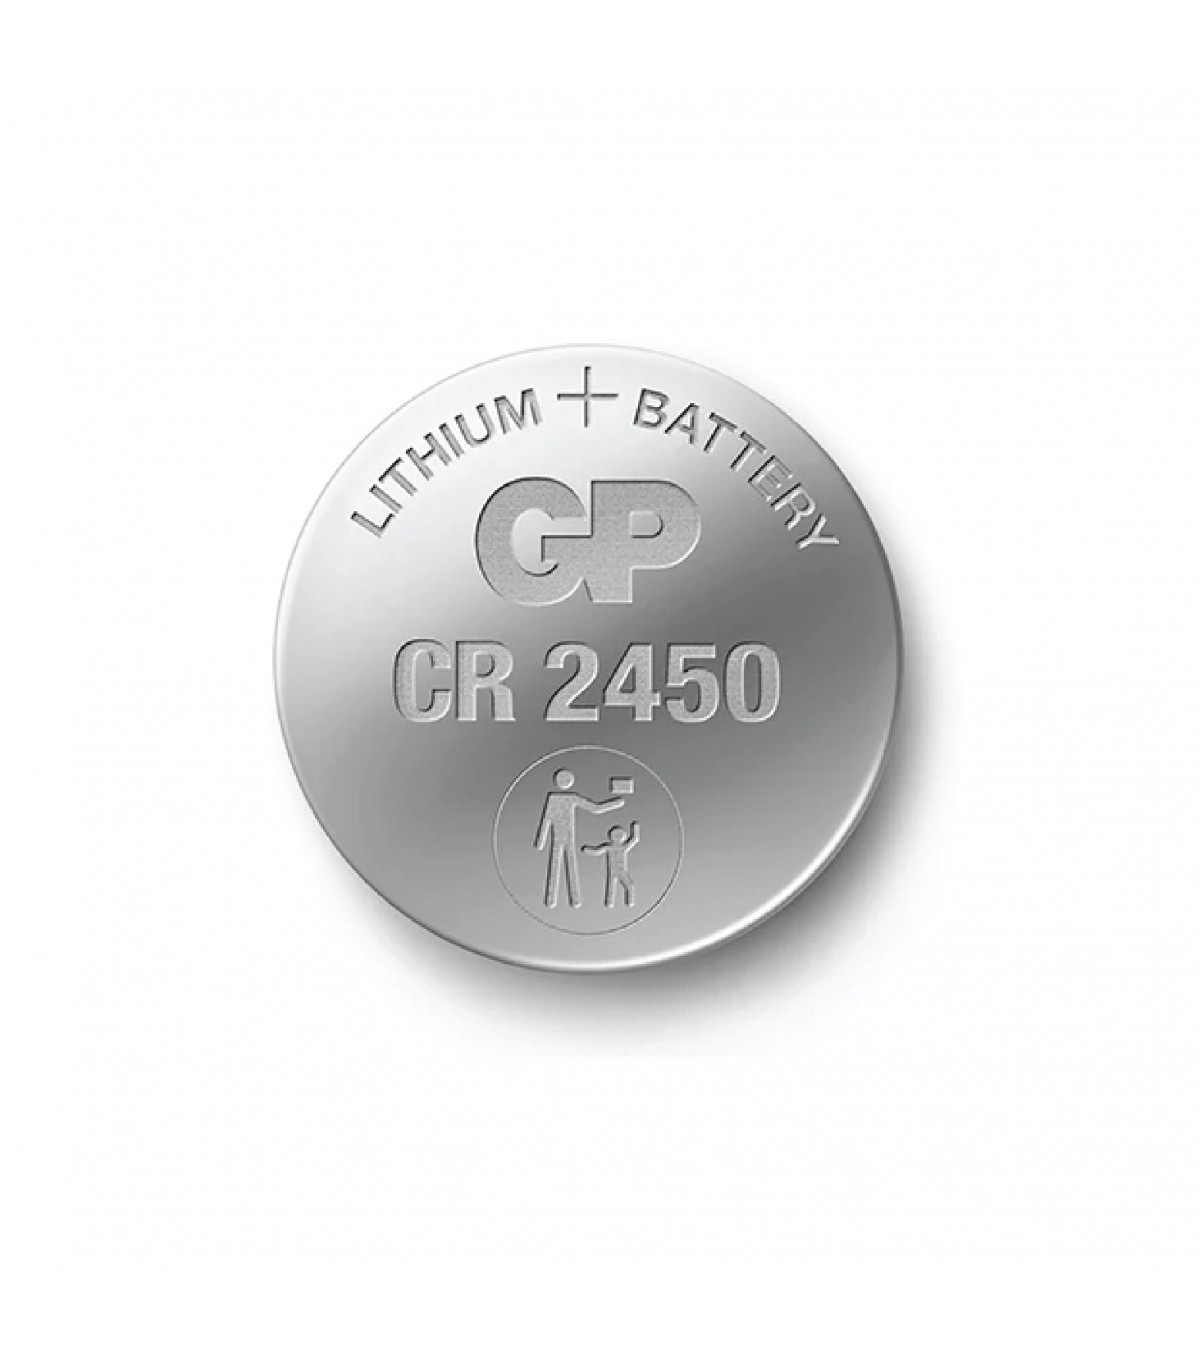 Buy GP Lithium Coin Battery CR2450, Econo Green